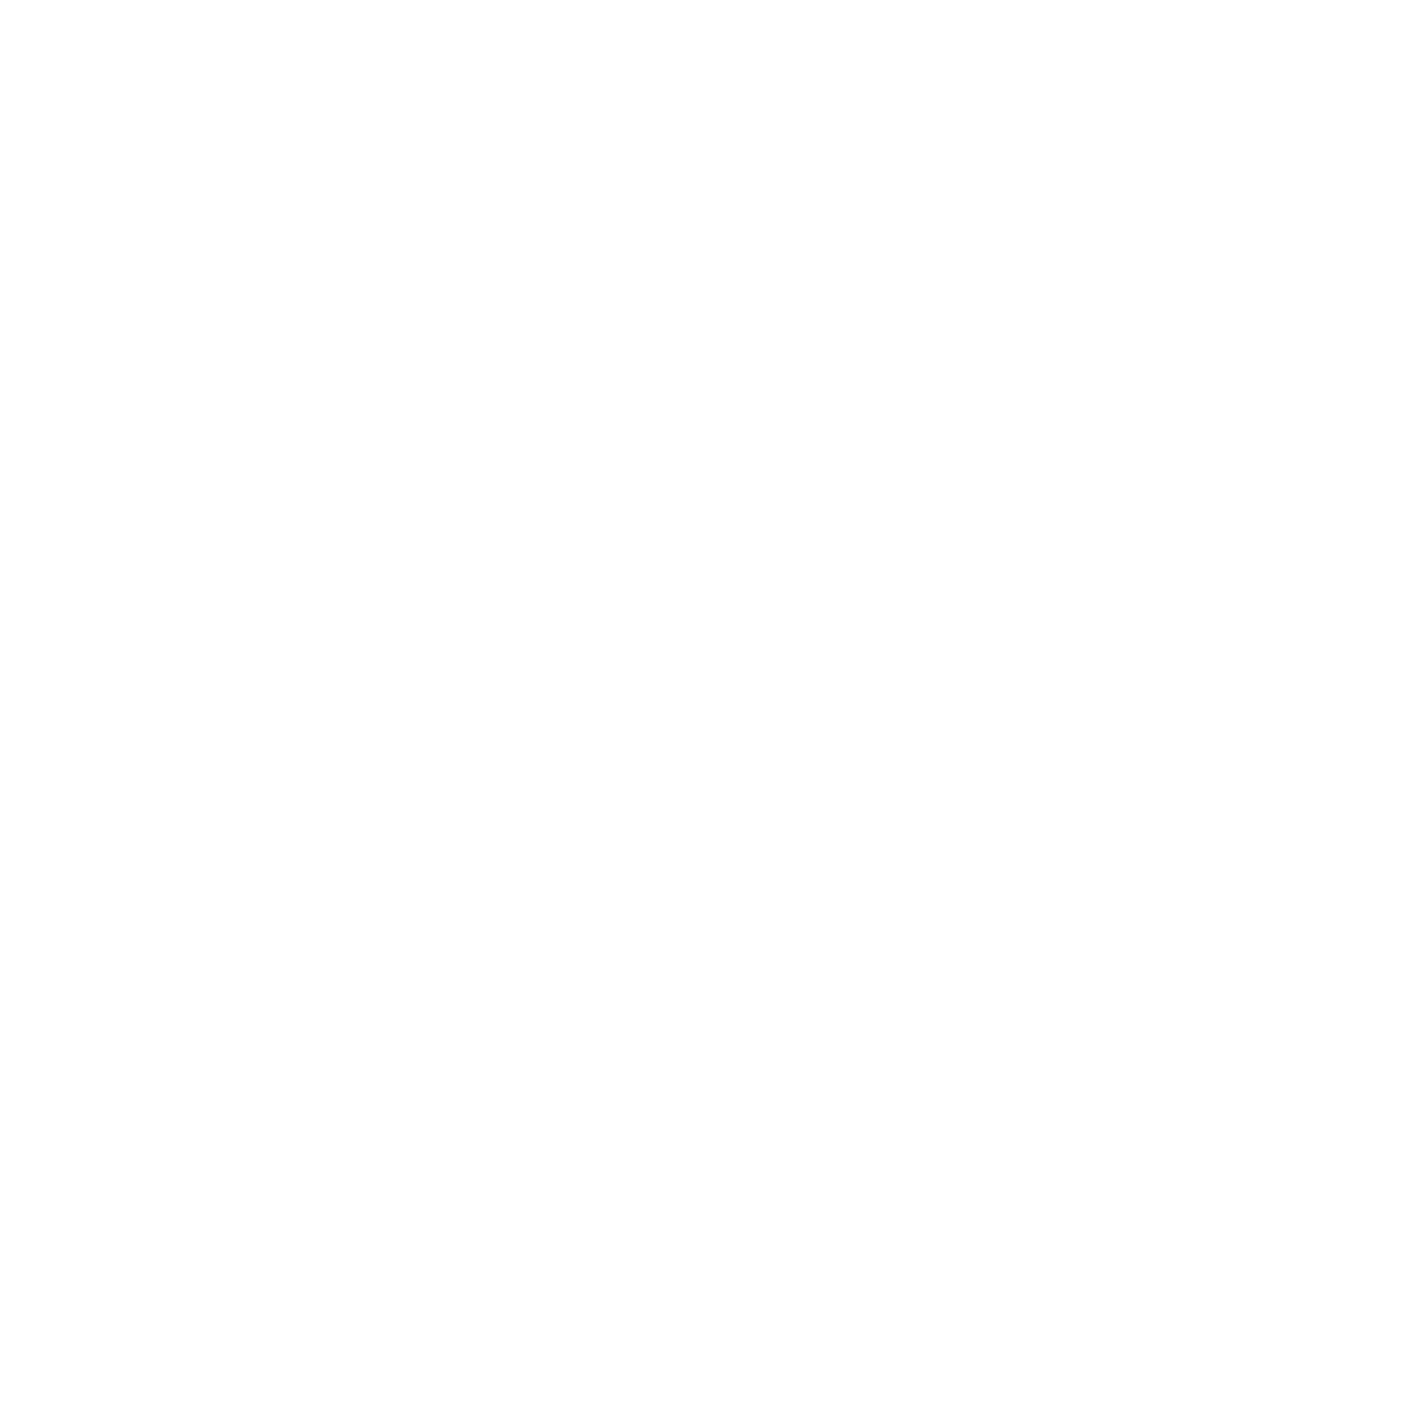 Northumberland Defender Hire